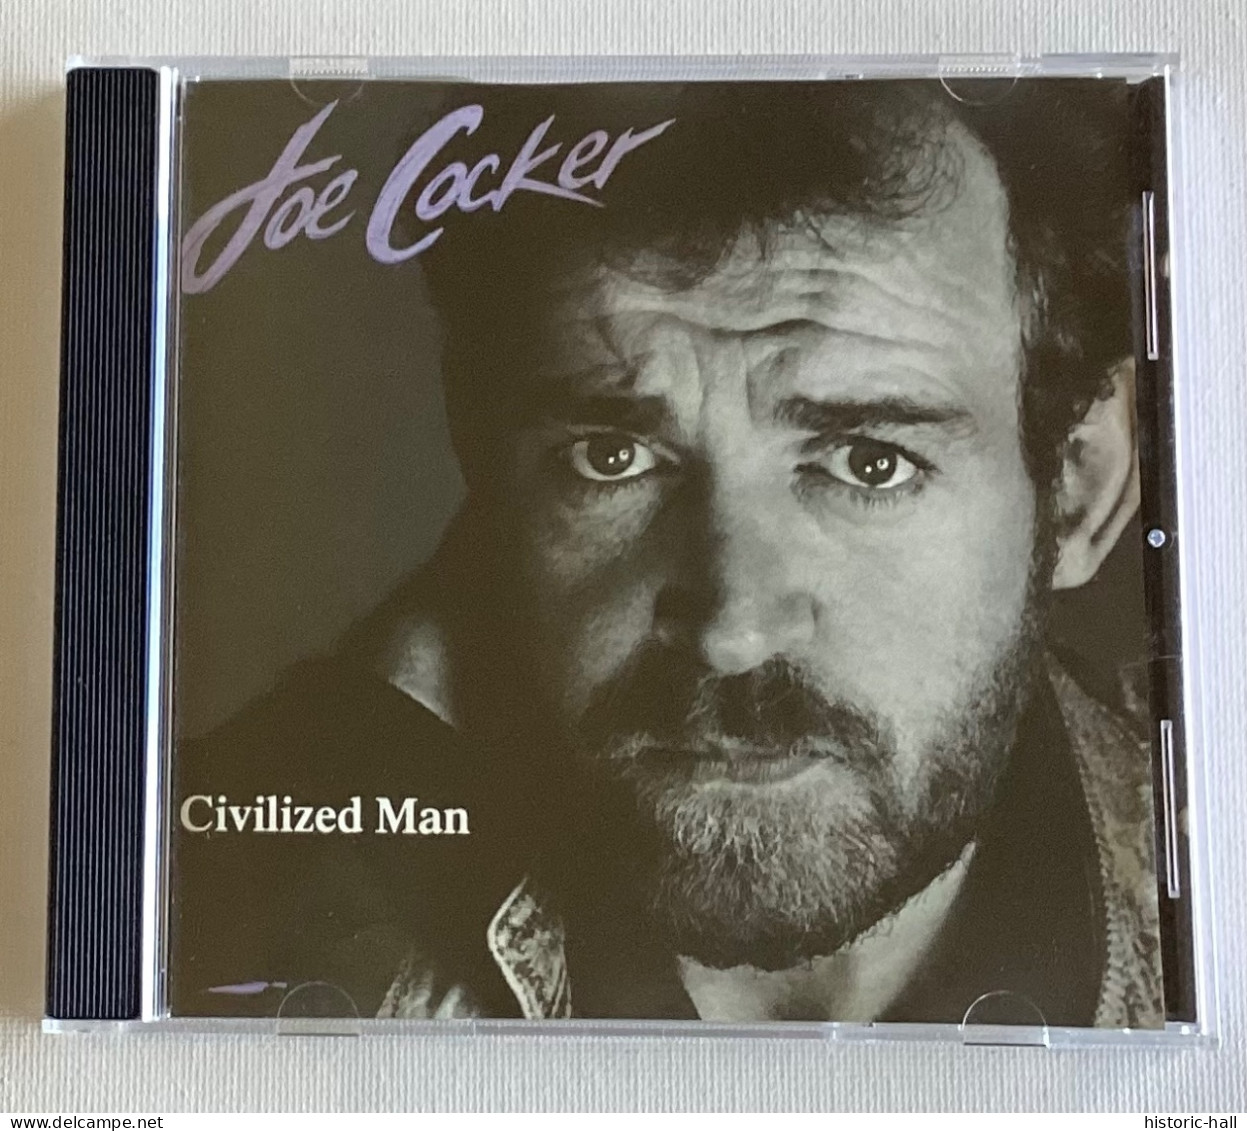 JOE COCKER - Civilized  Man - CD - 1984 - Holland Press - Rock